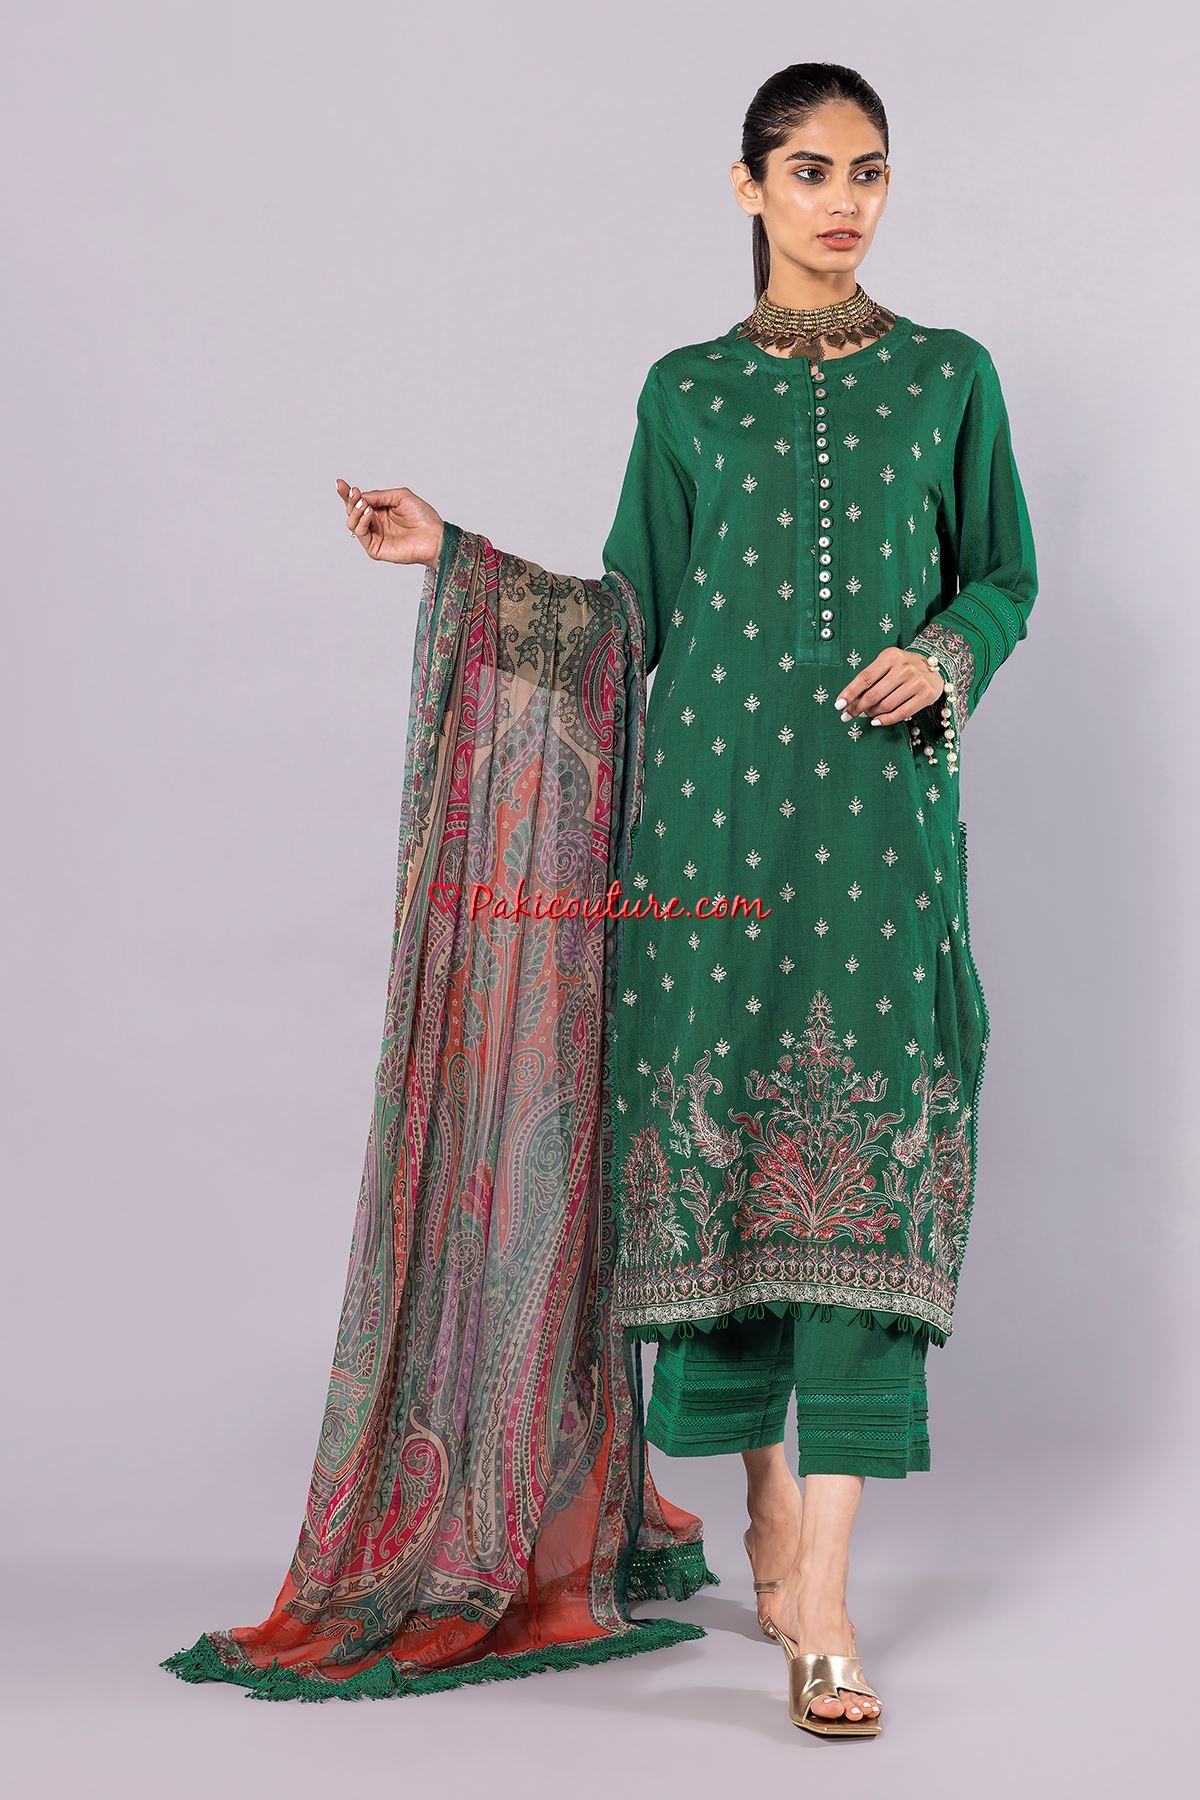 Buy Lime Green Solid Cotton Khadi Kurta Online - W for Woman